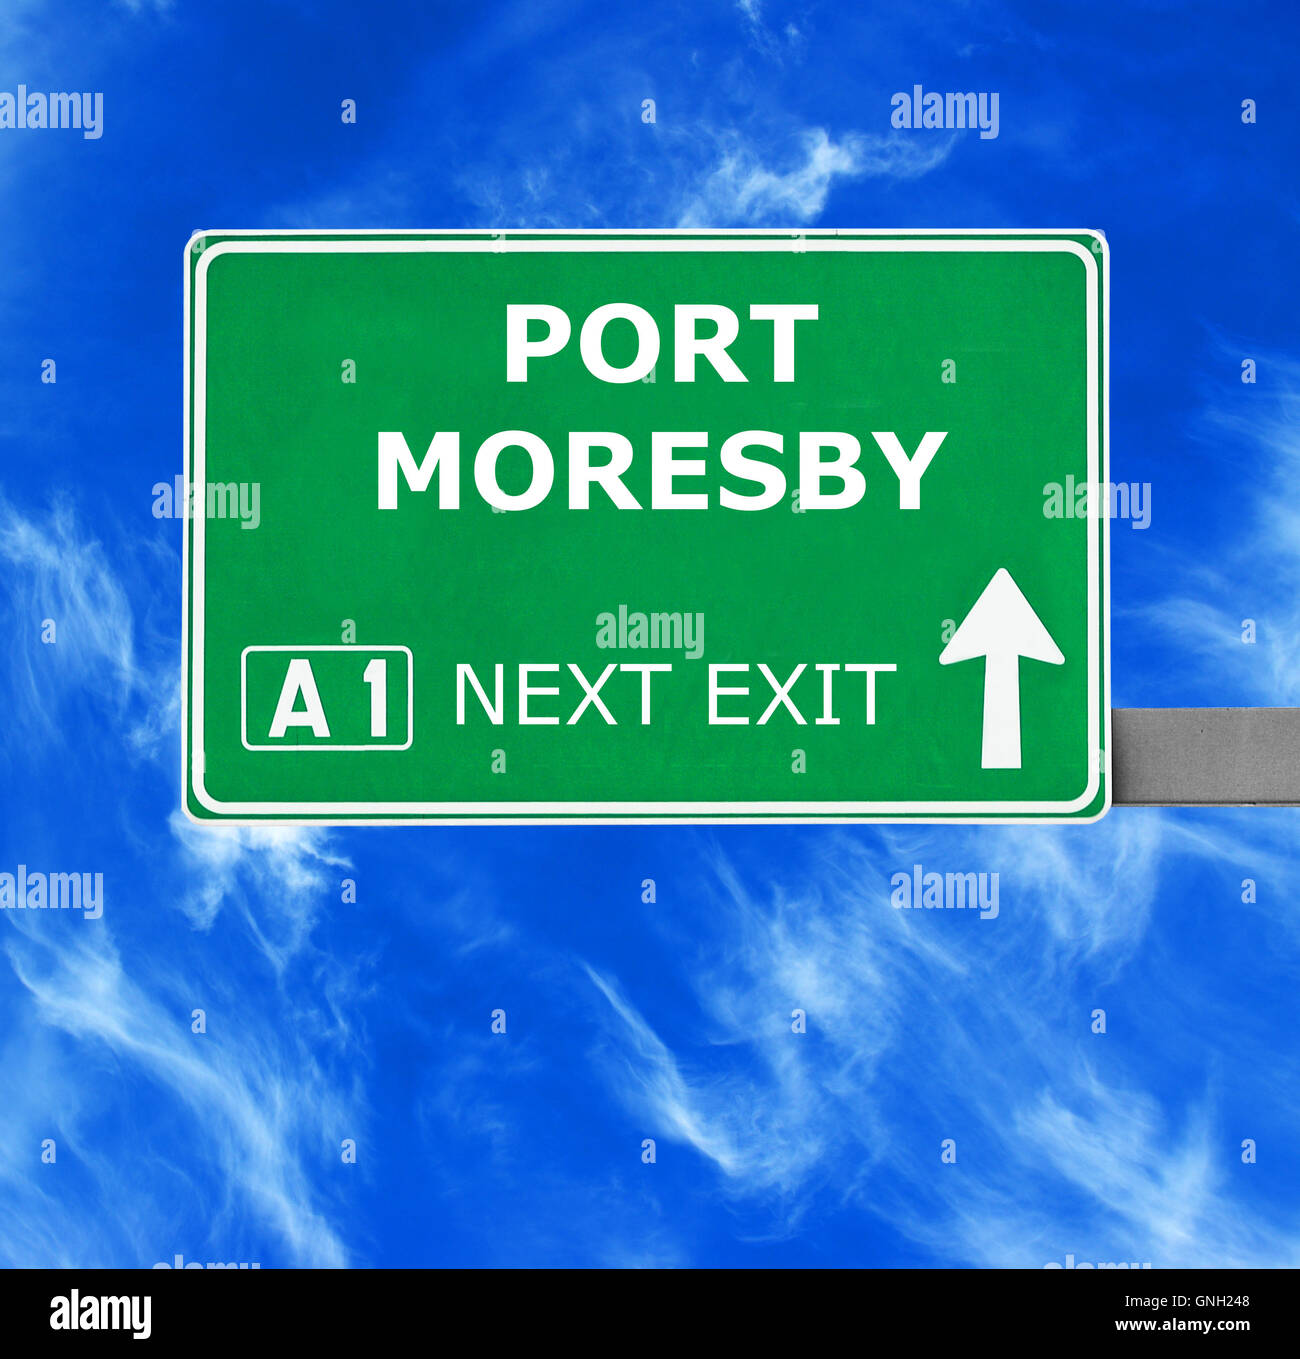 PORT MORESBY Straßenschild gegen klar blauen Himmel Stockfoto